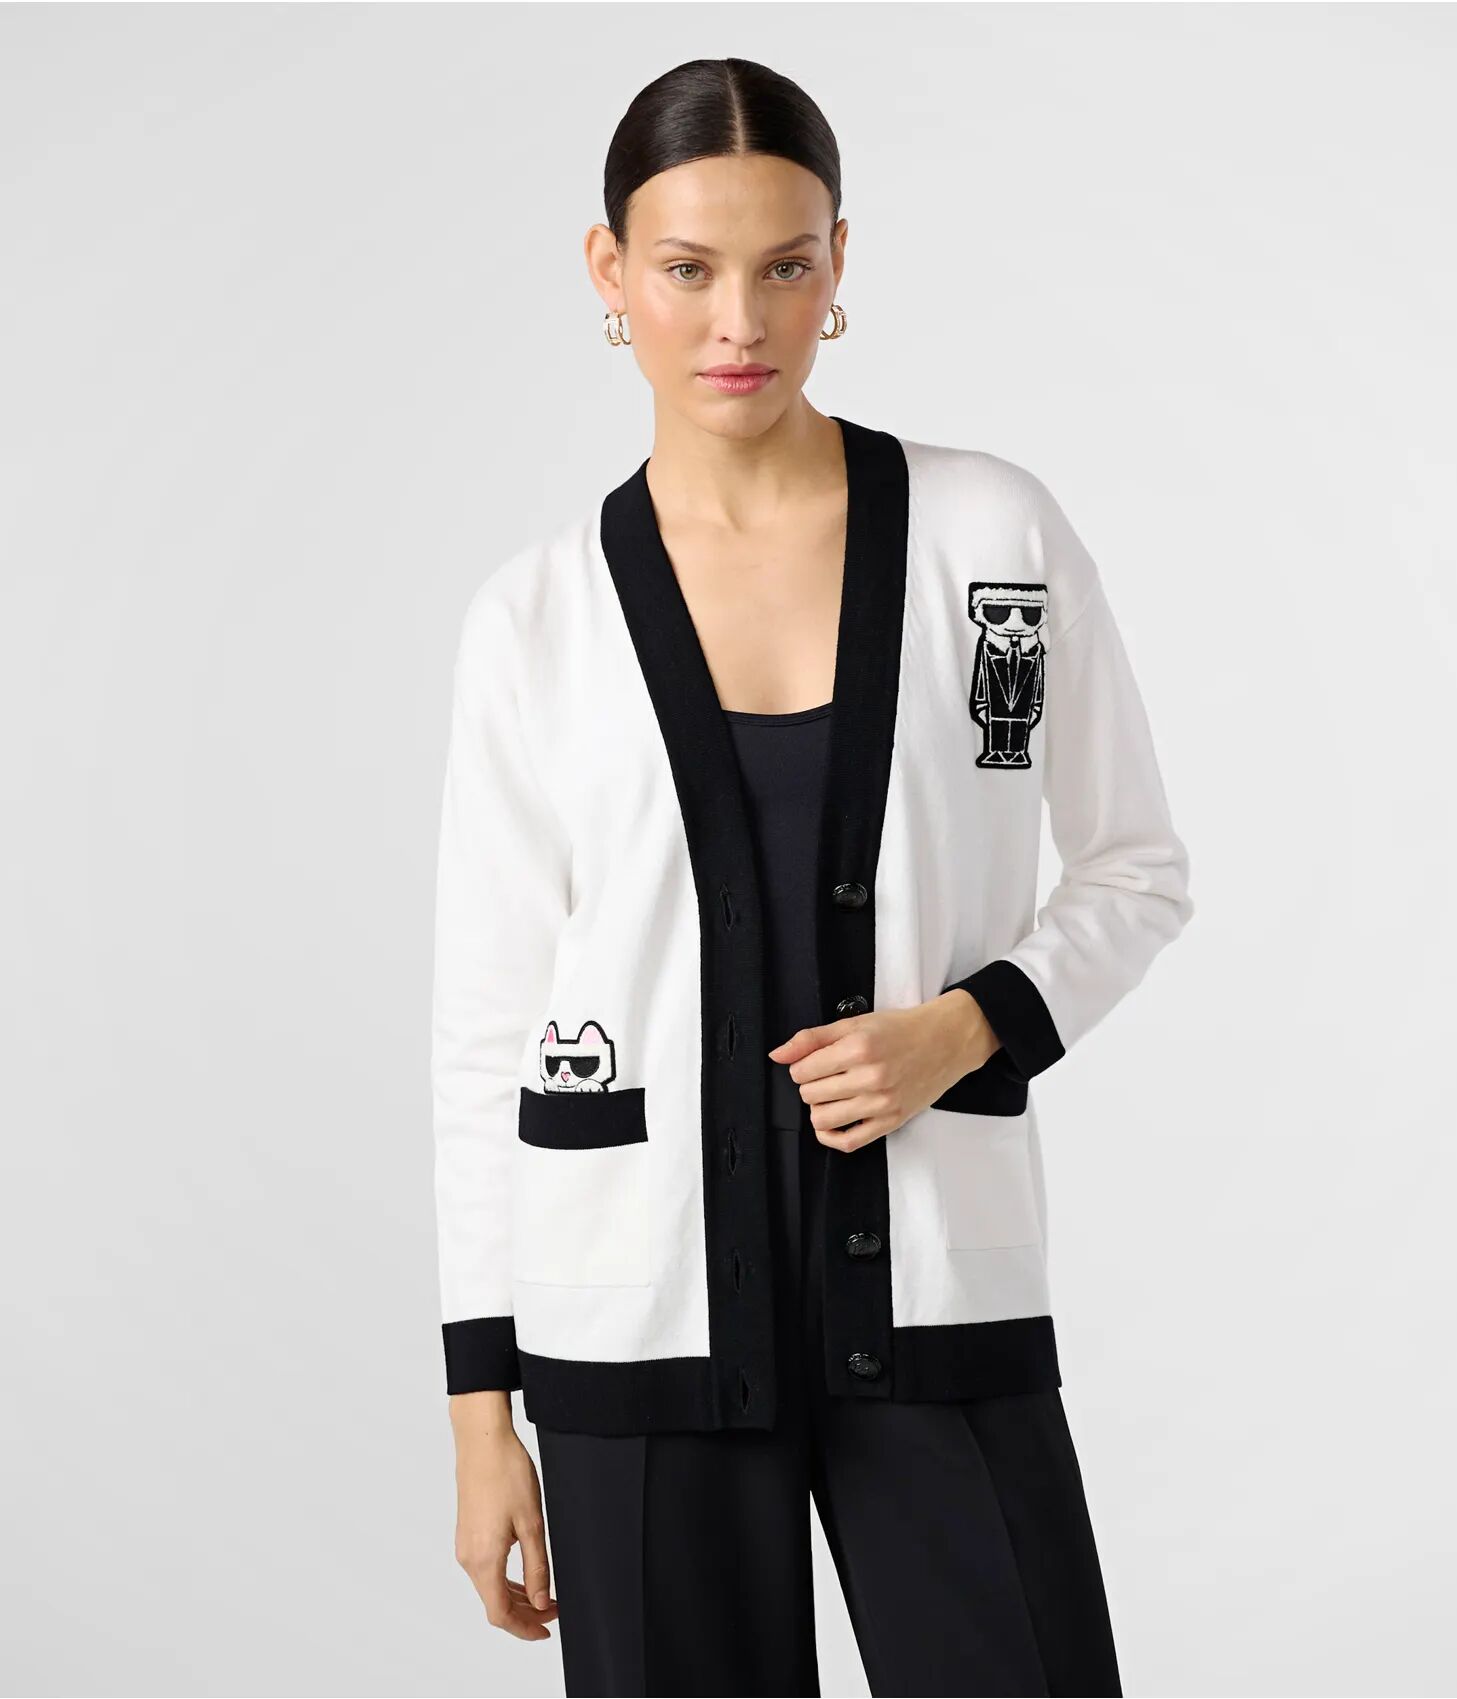 Karl Lagerfeld Paris   Women's Varsity Patches Cardigan   Soft White/Black   Cotton/Nylon   Size XL  - Soft White/Black - Size: Extra Large